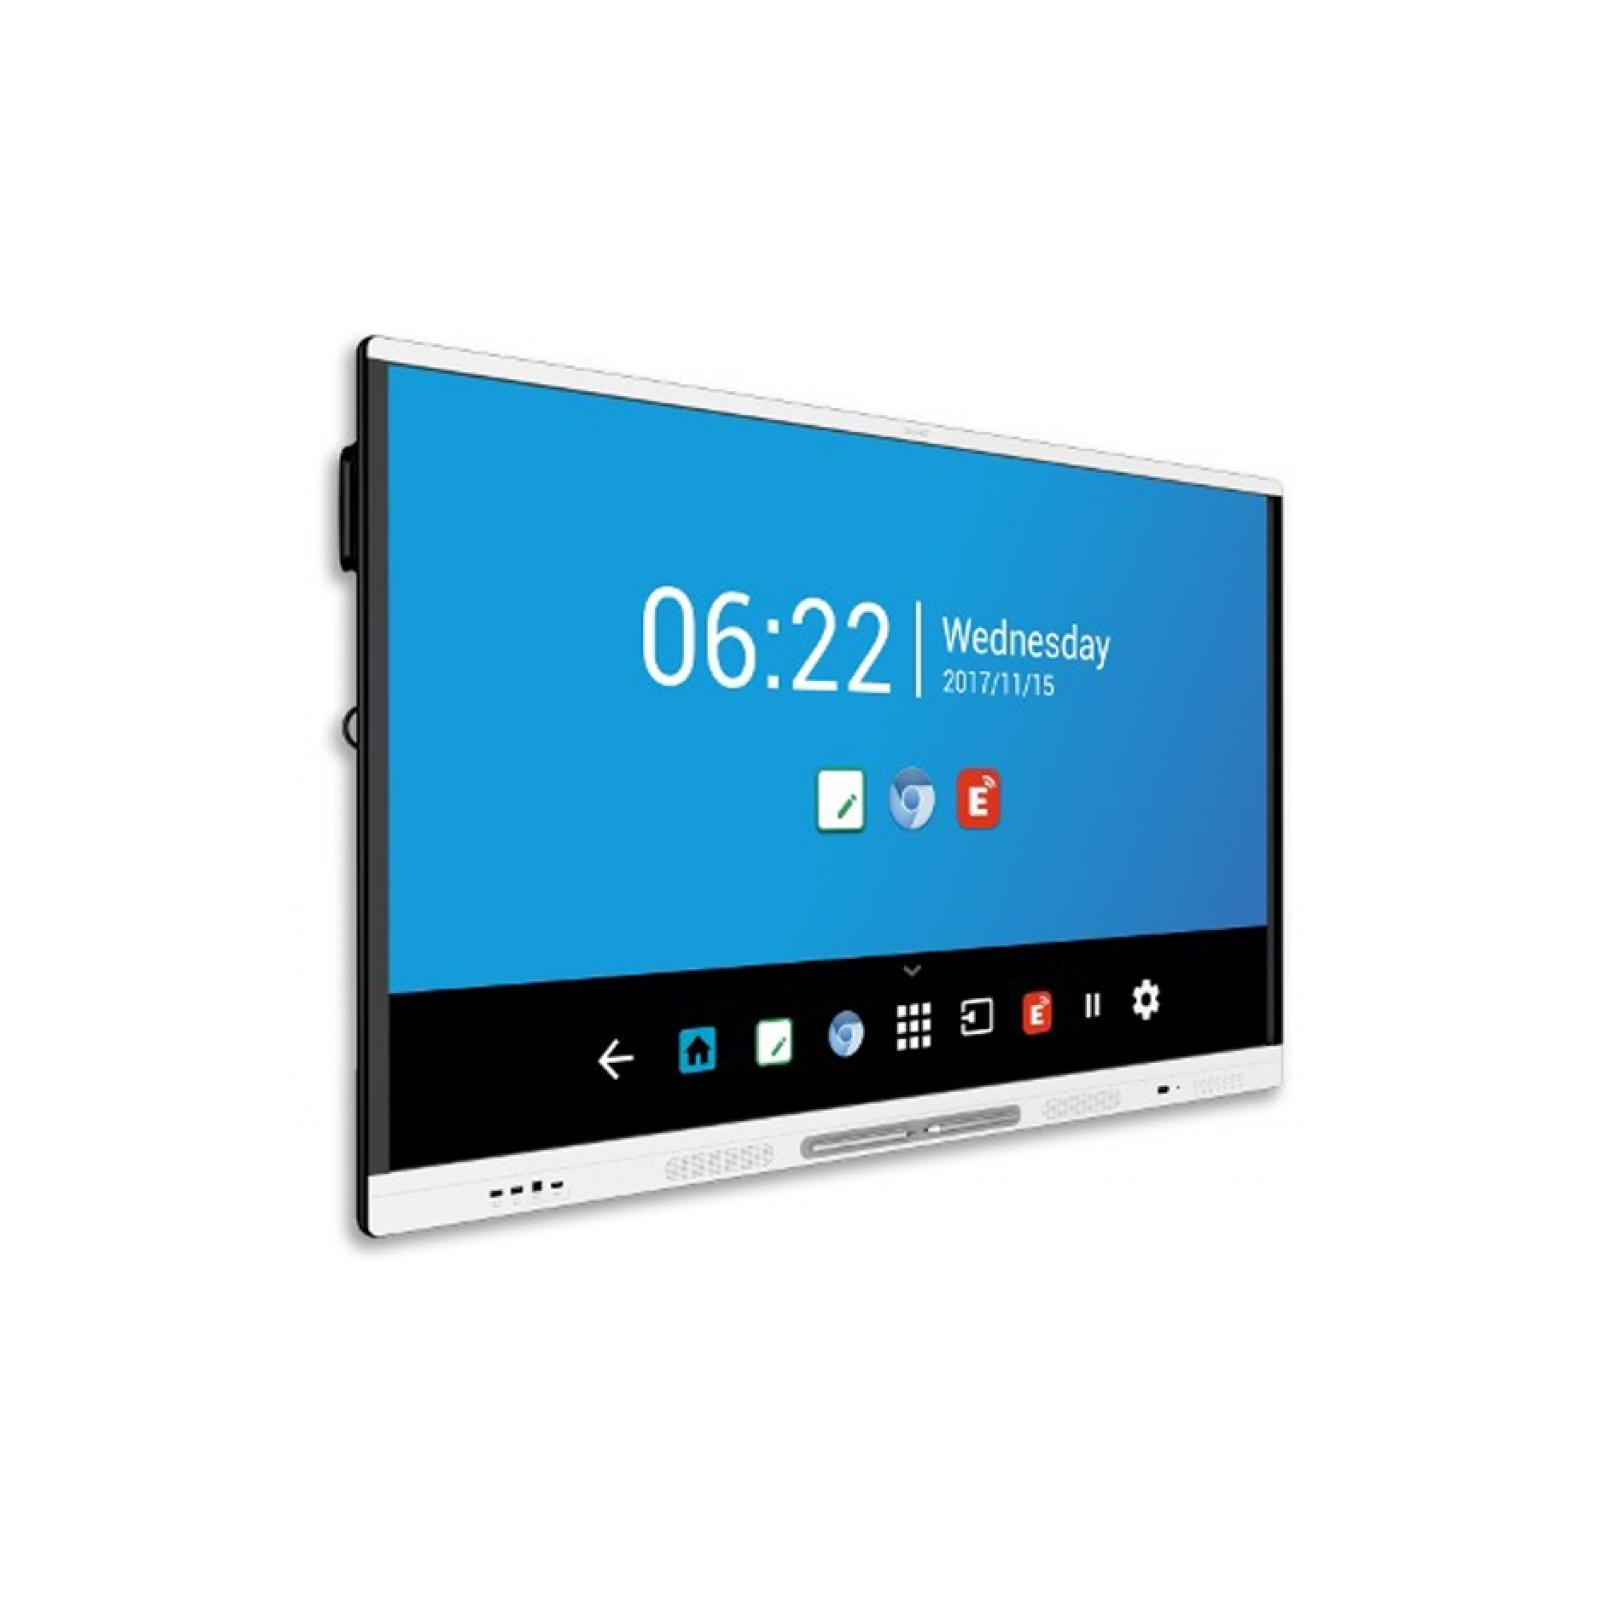 LCD панель Smart SBID-MX275-V4 изображение 2